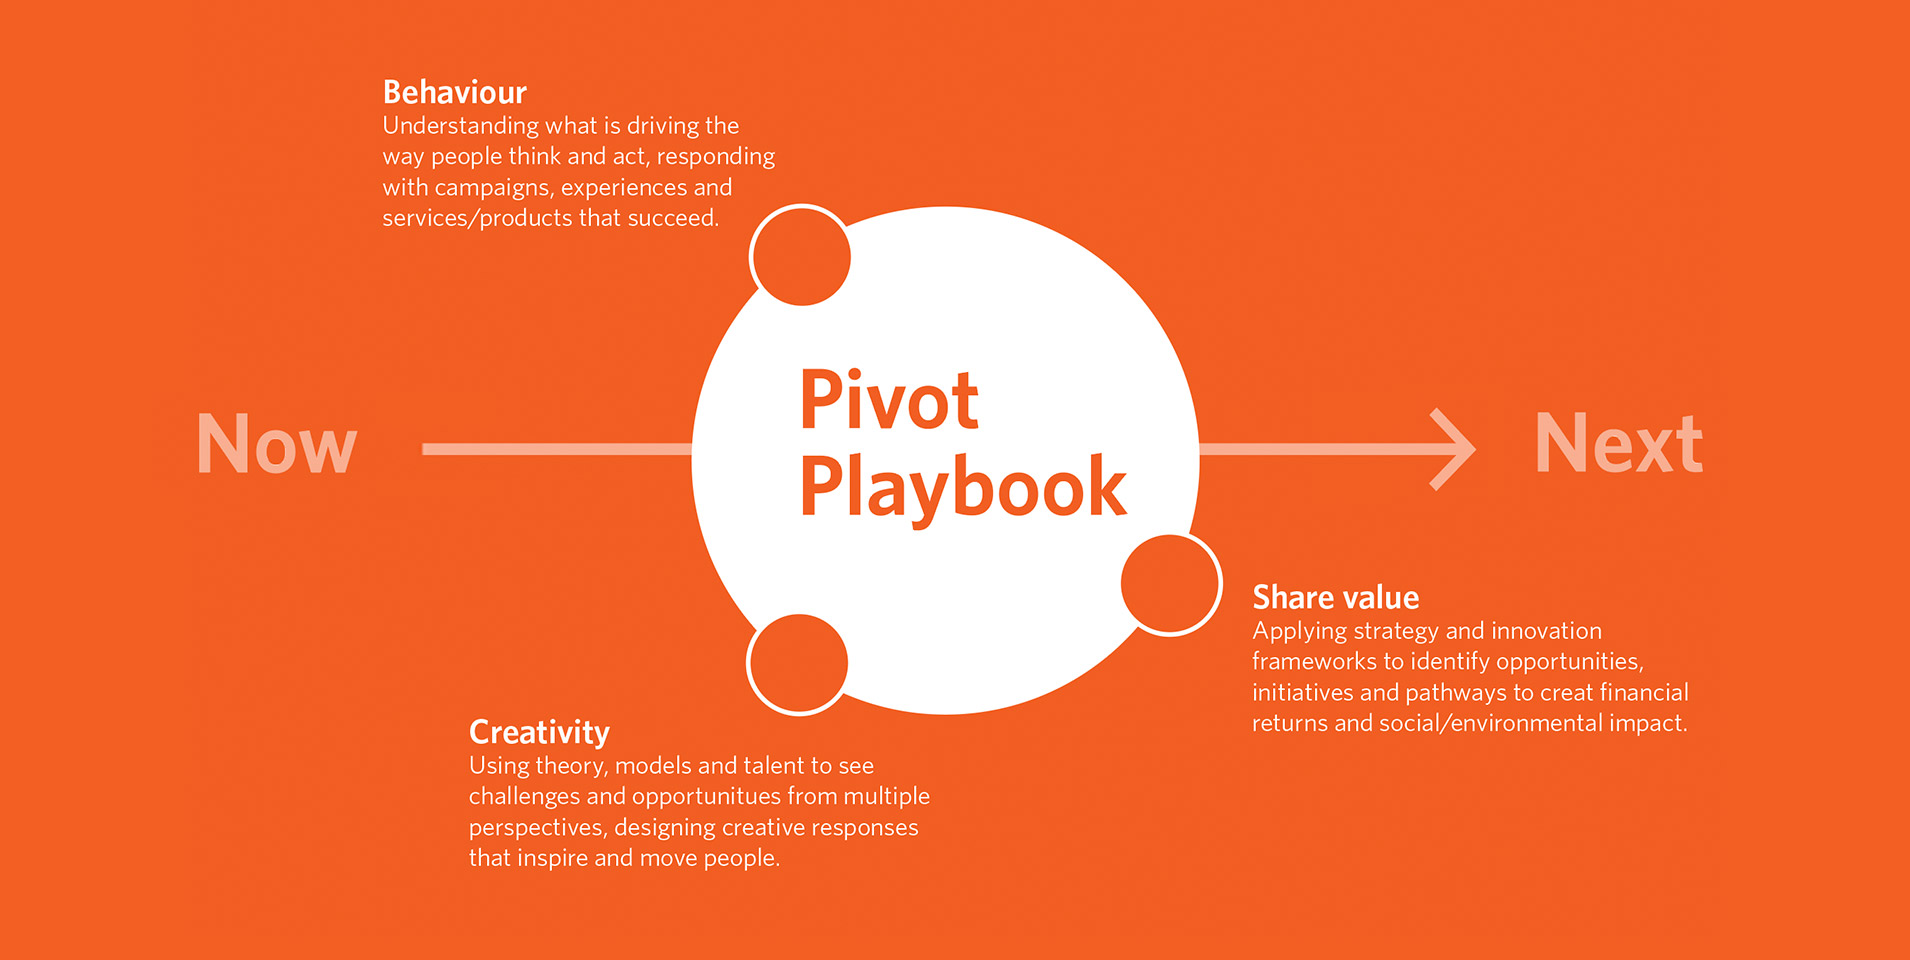 Behaviour, creativity, shared value and the Pivot Playbook.